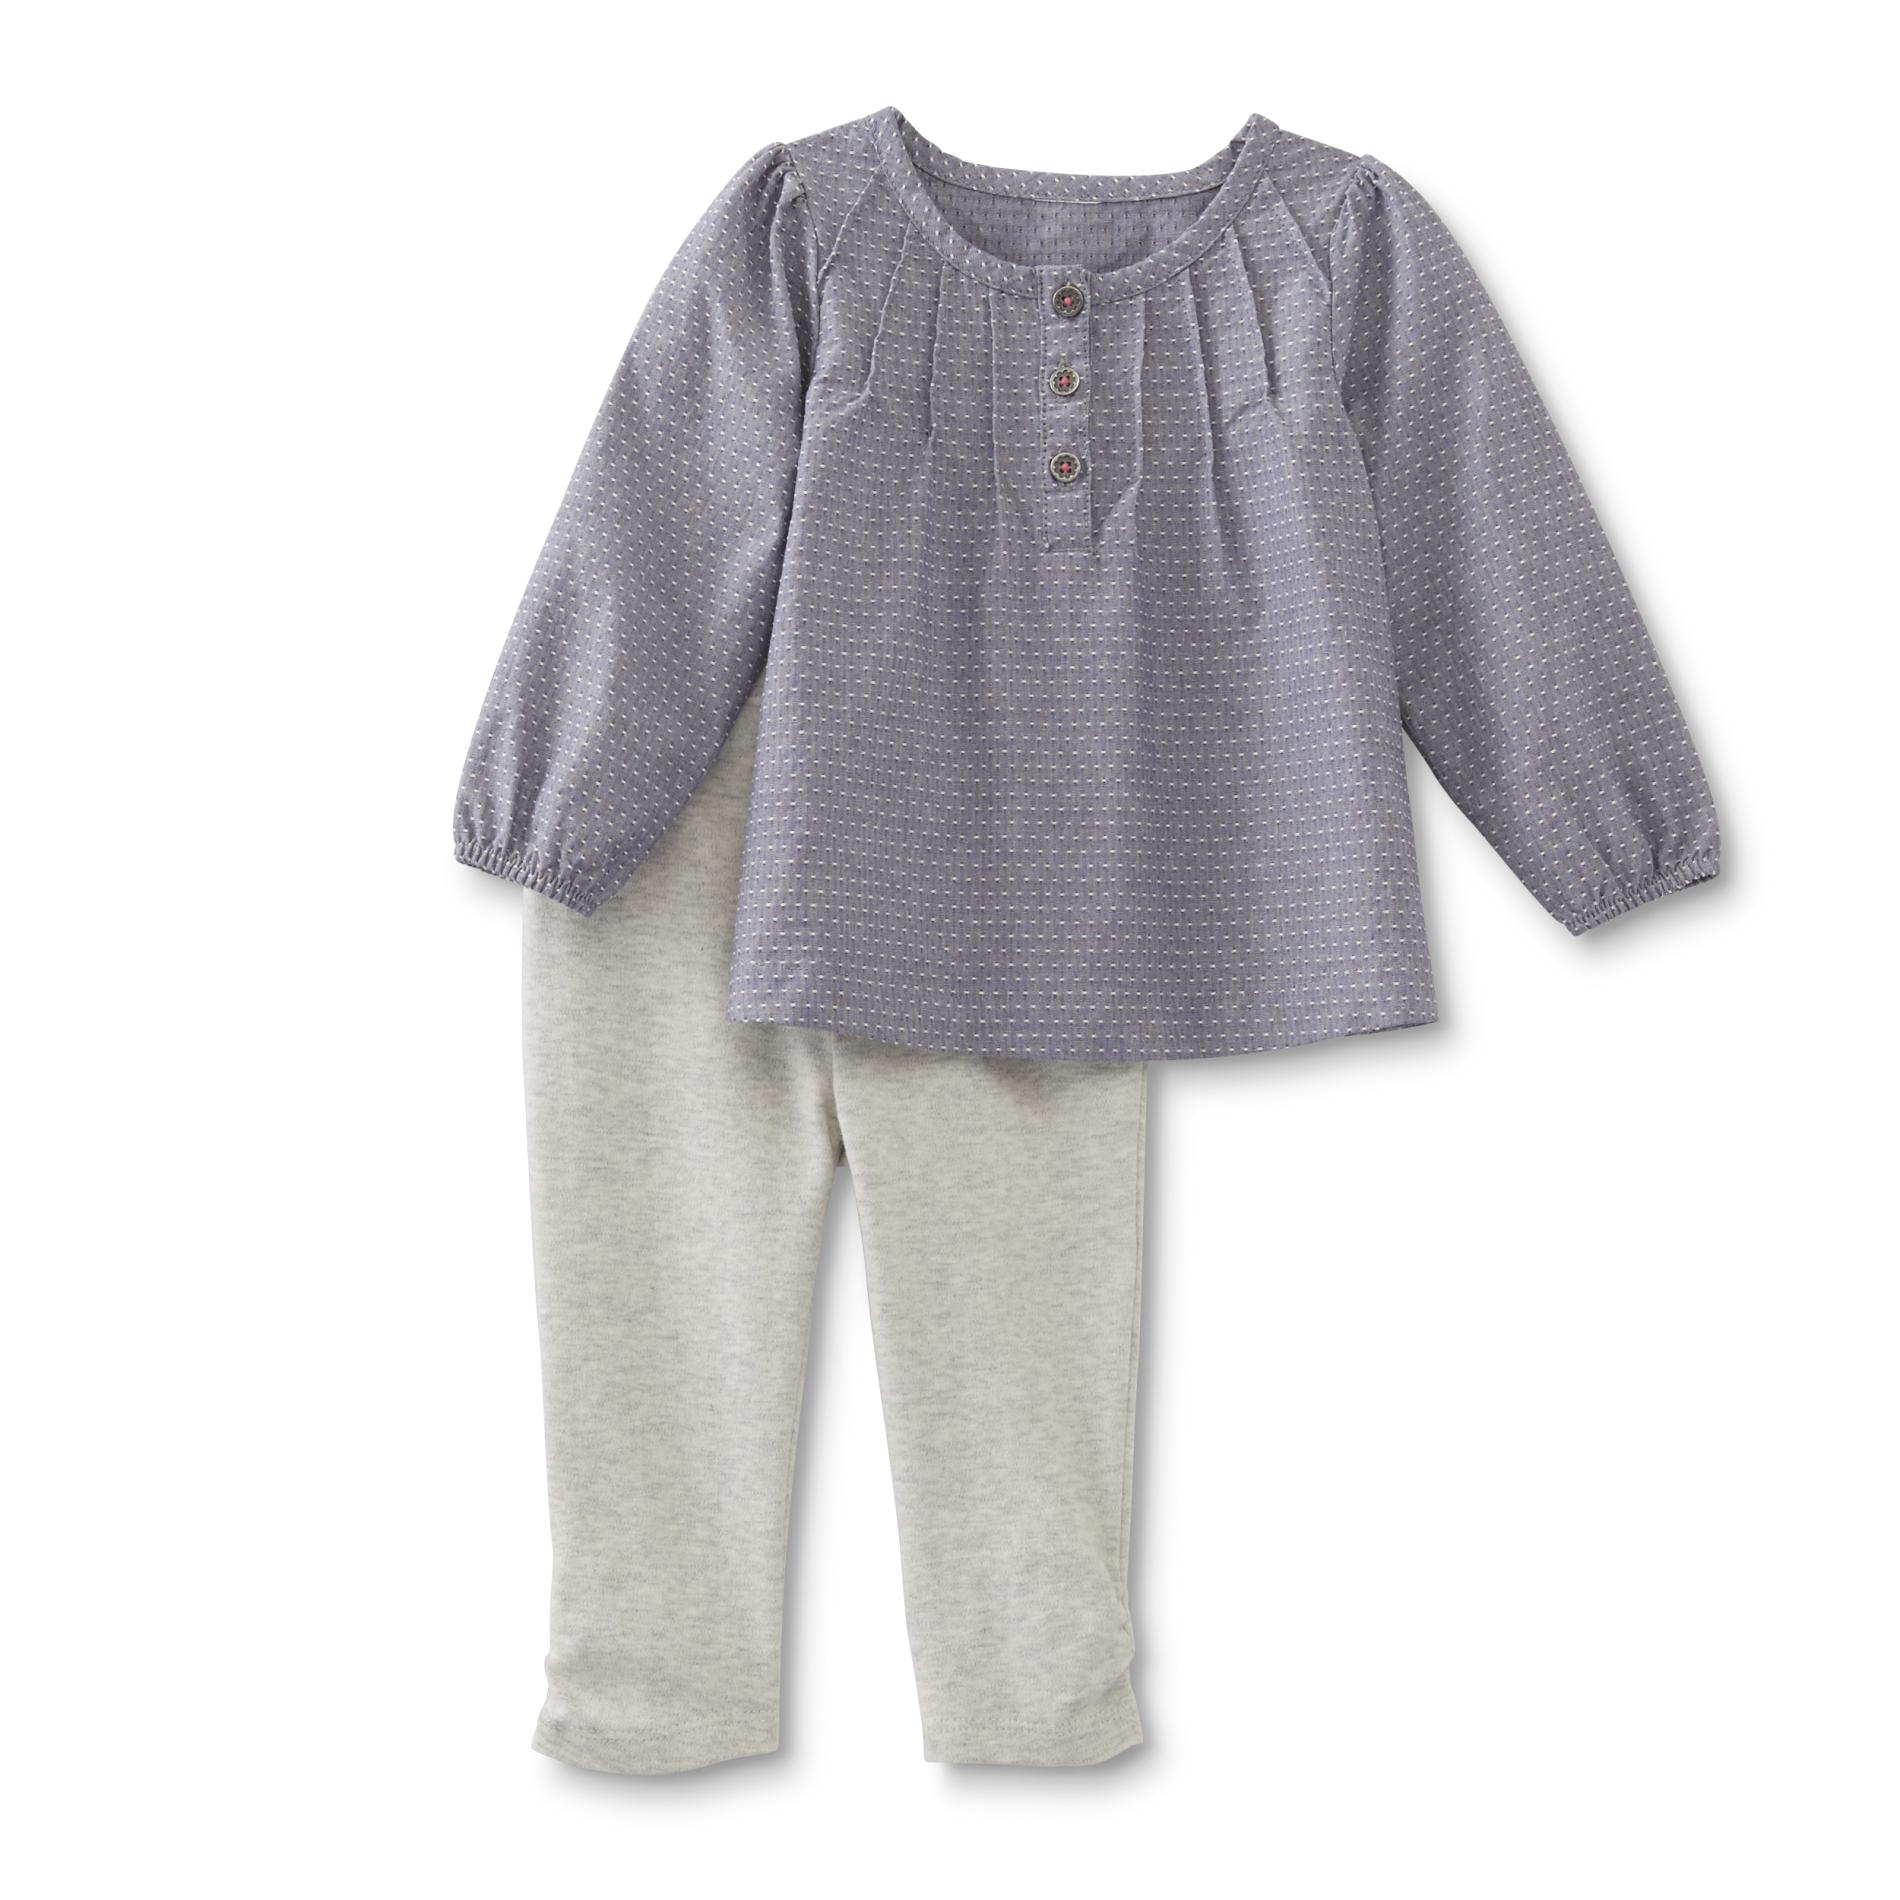 Little Wonders Newborn & Infant Girl's Long-Sleeve Top & Pants - Polka Dot